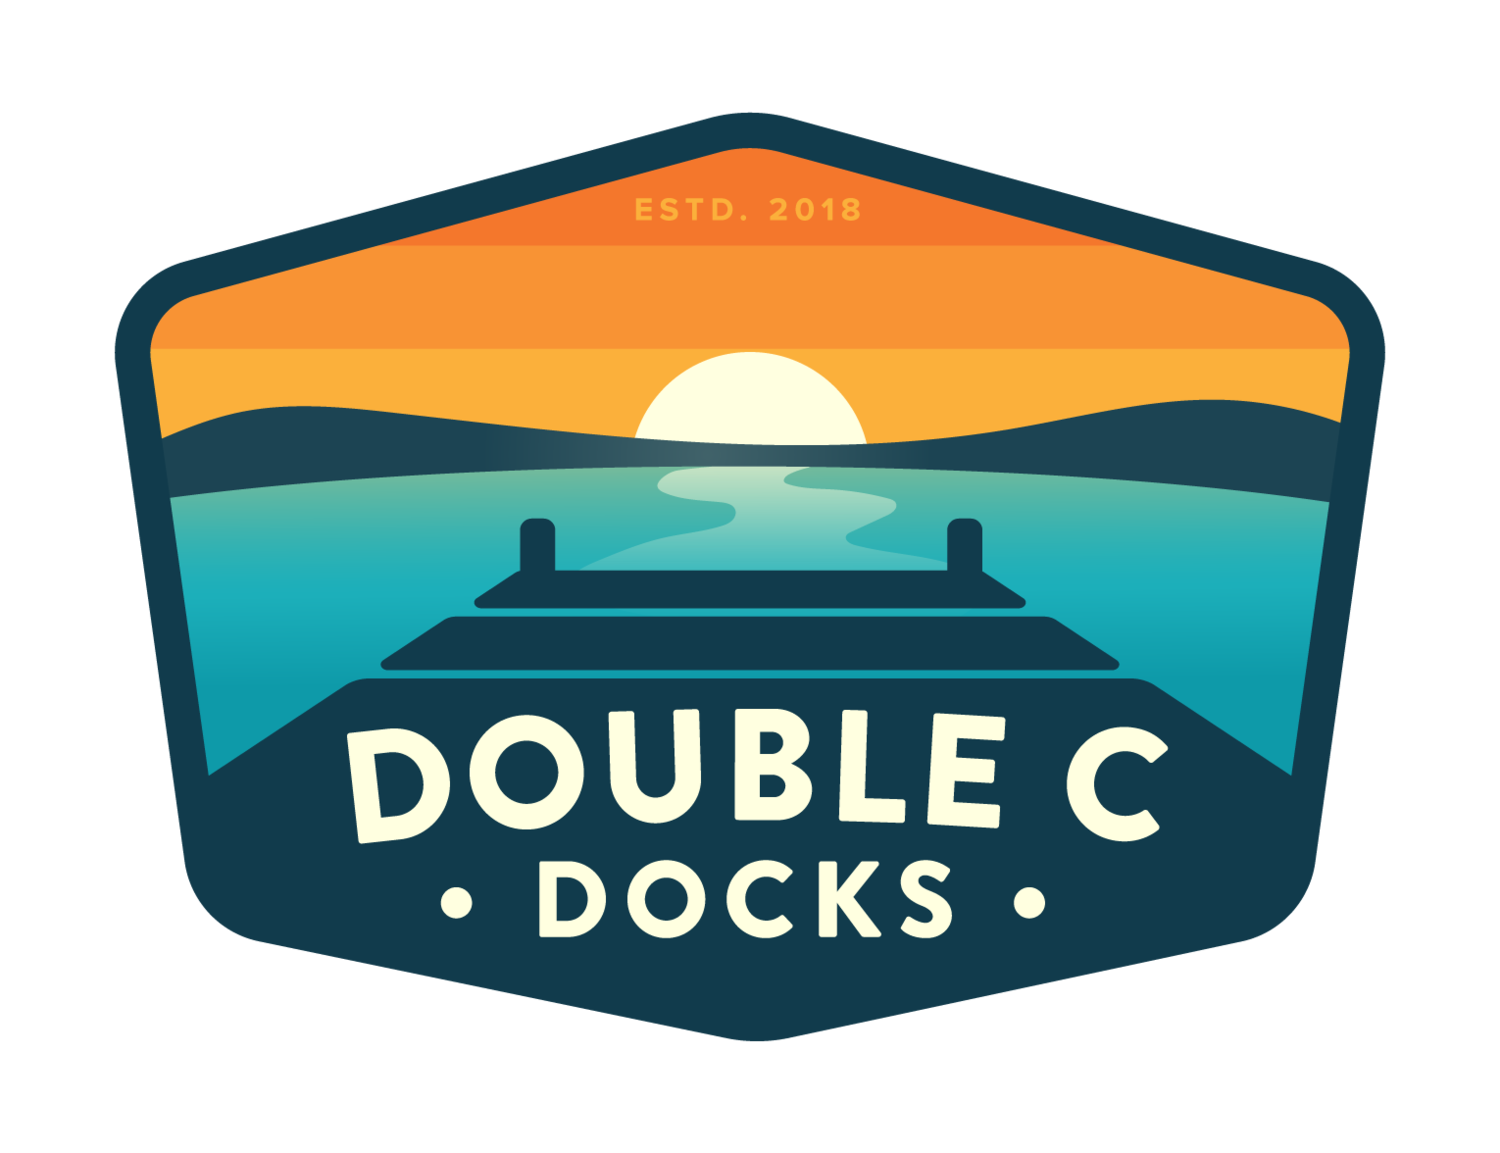 Double C Docks